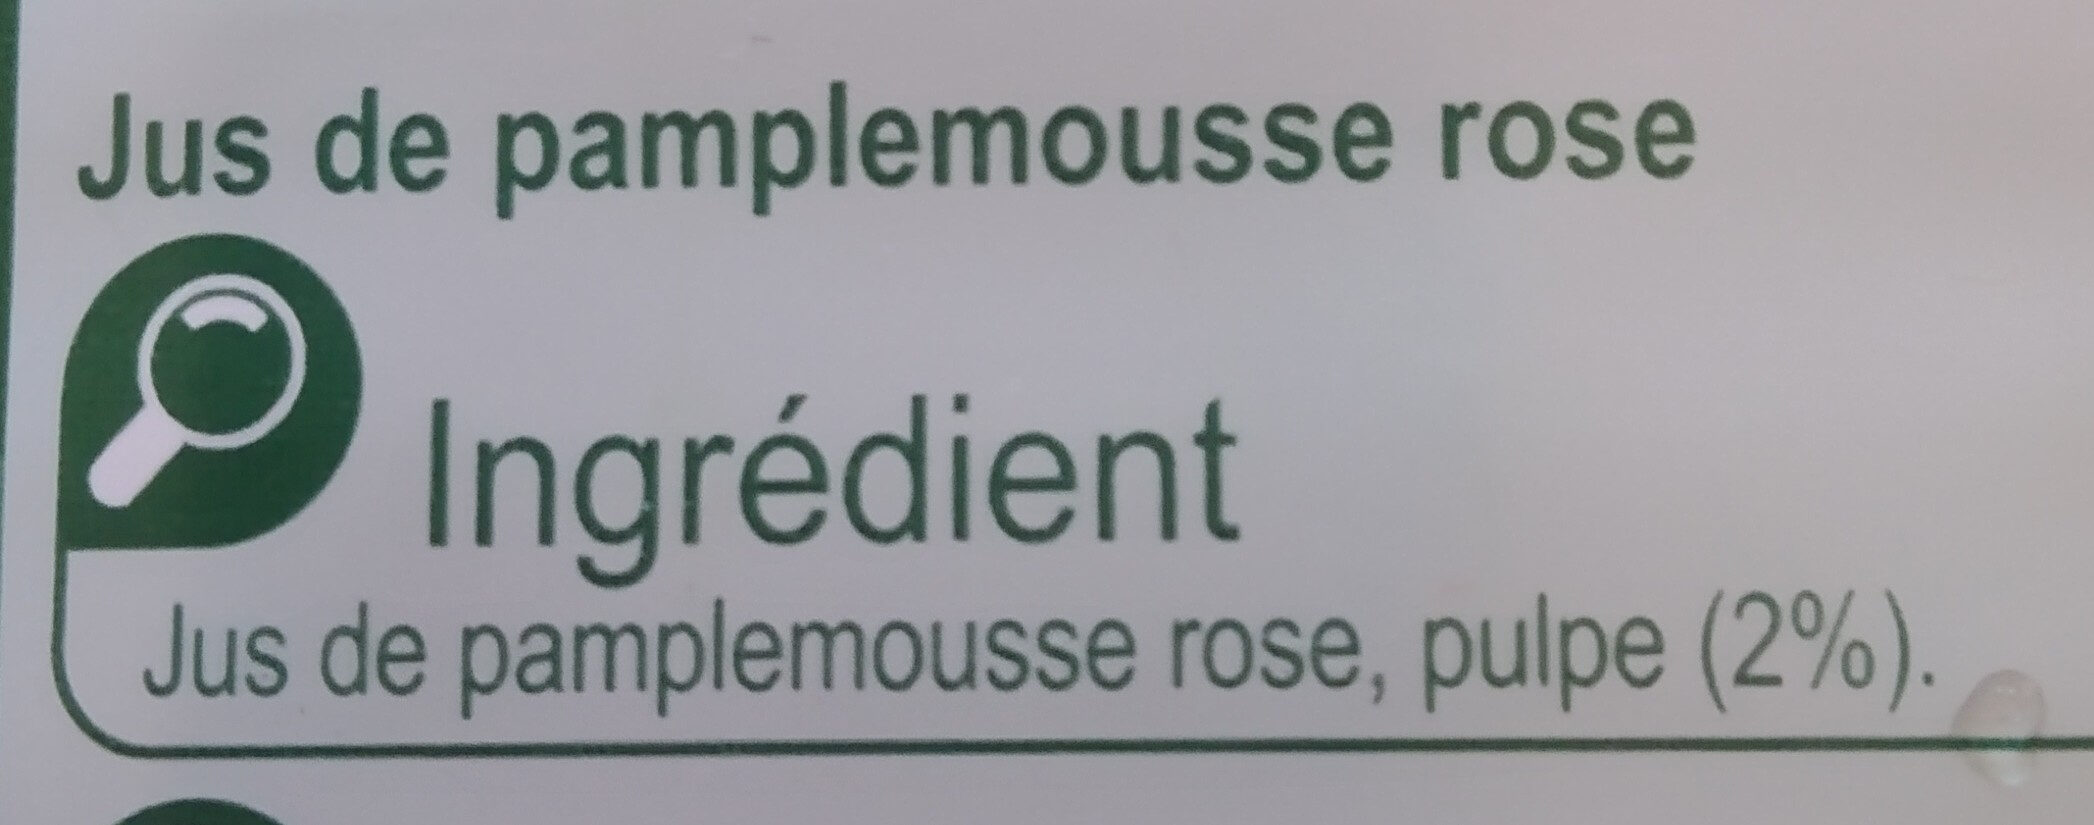 Jus de pamplemousse rose - Ingredienser - fr